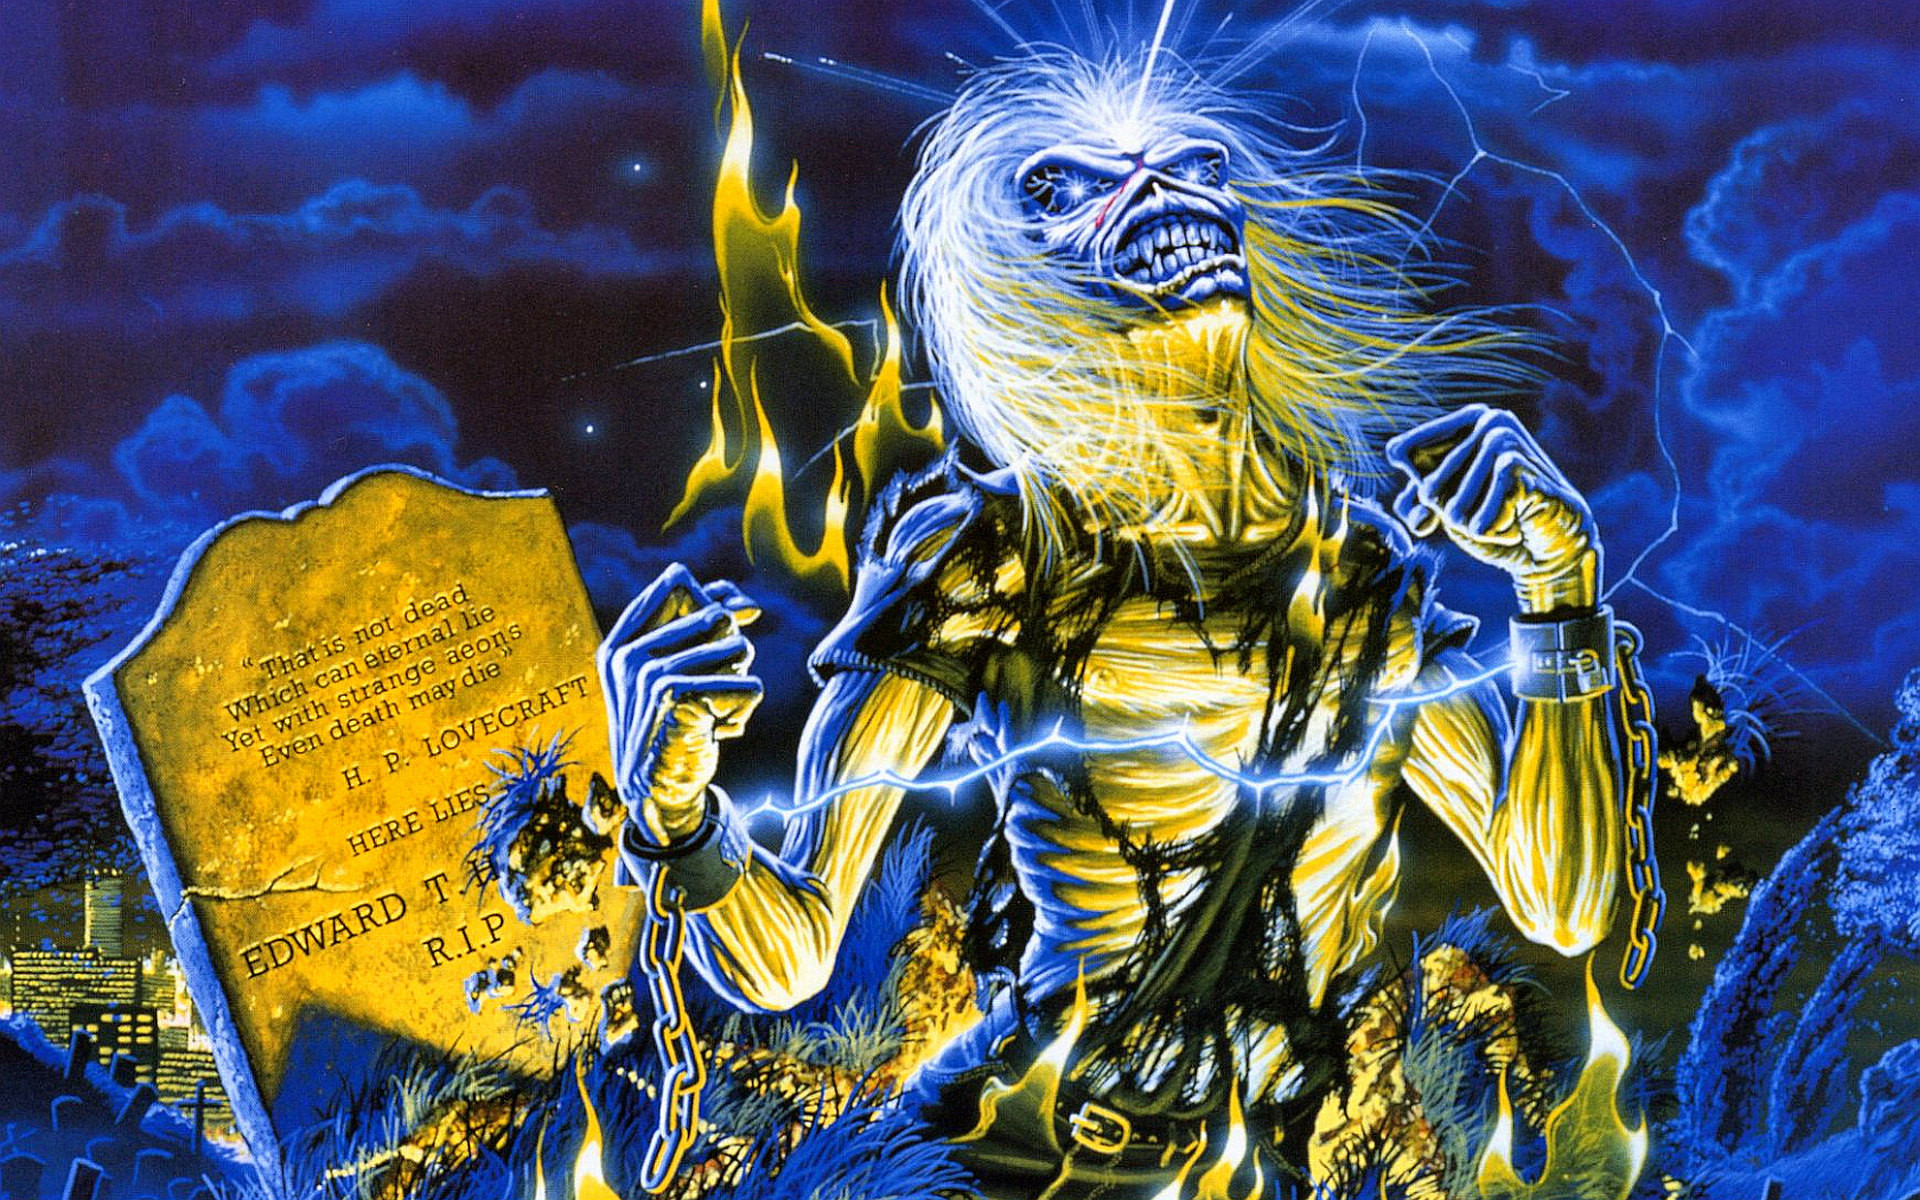 1920x1200 Iron Maiden ~ Live After Death.My favorite Maiden album cover.